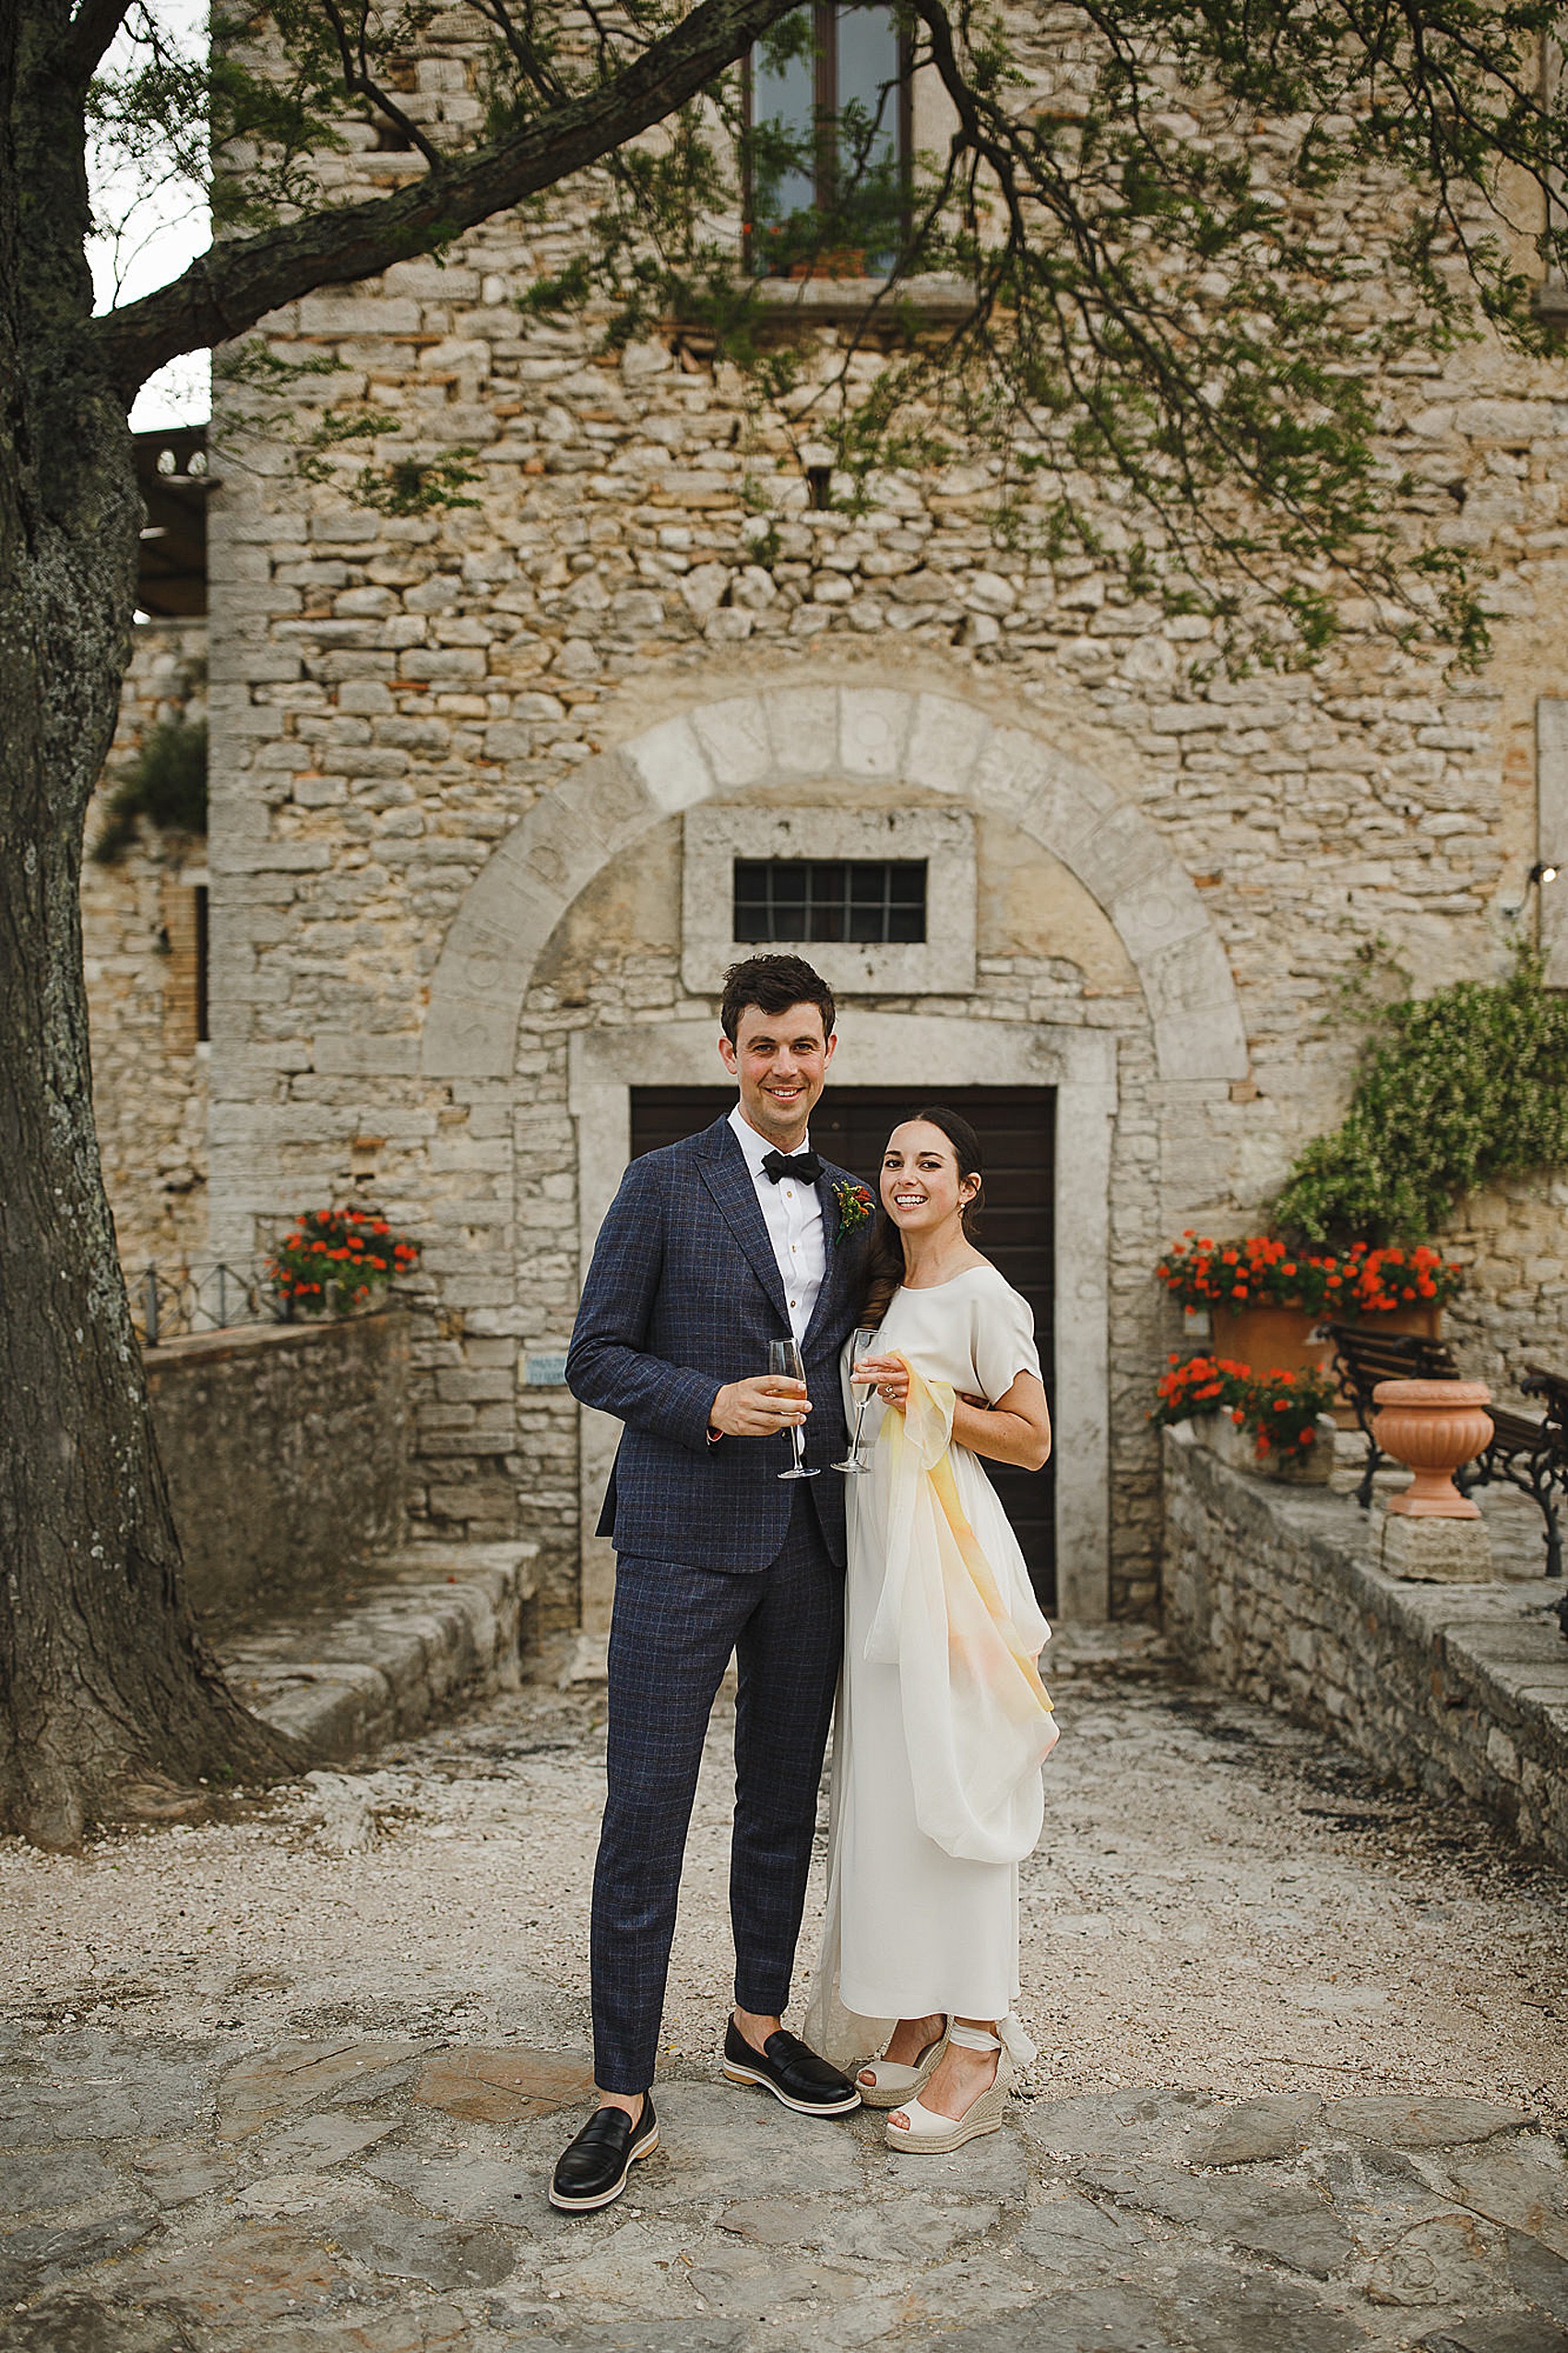 96 Romantic outdoor Italian wedding